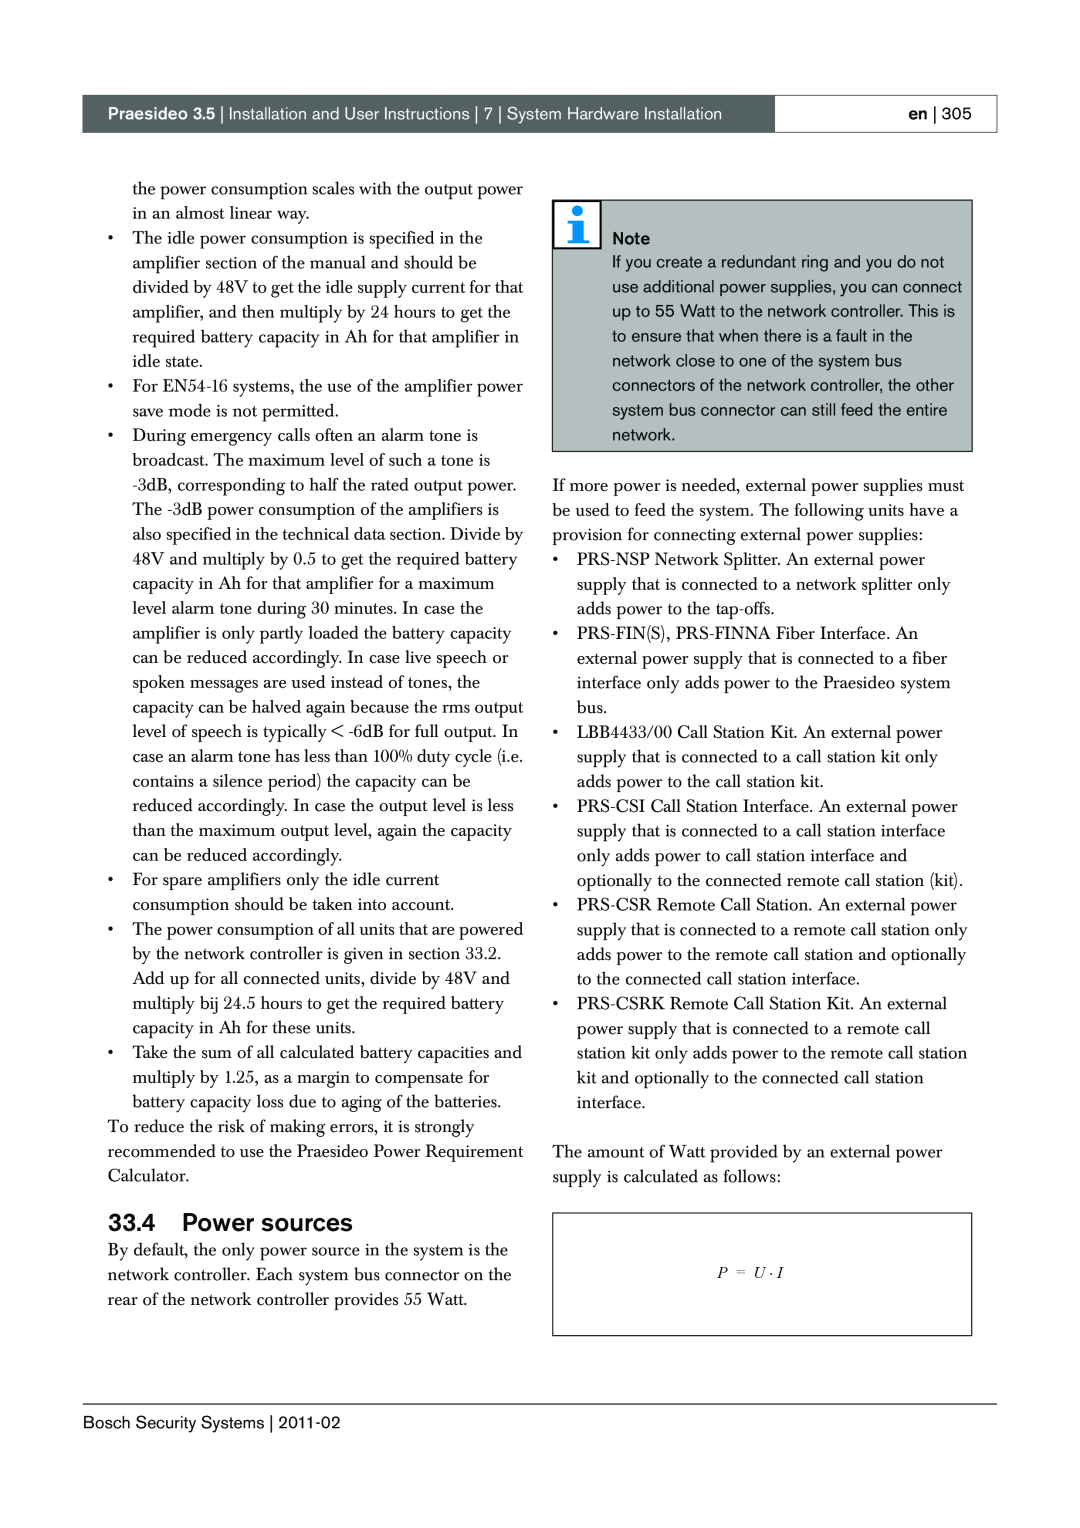 Bosch Appliances 3.5 manual 33.4Power sources, en, Bosch Security Systems 